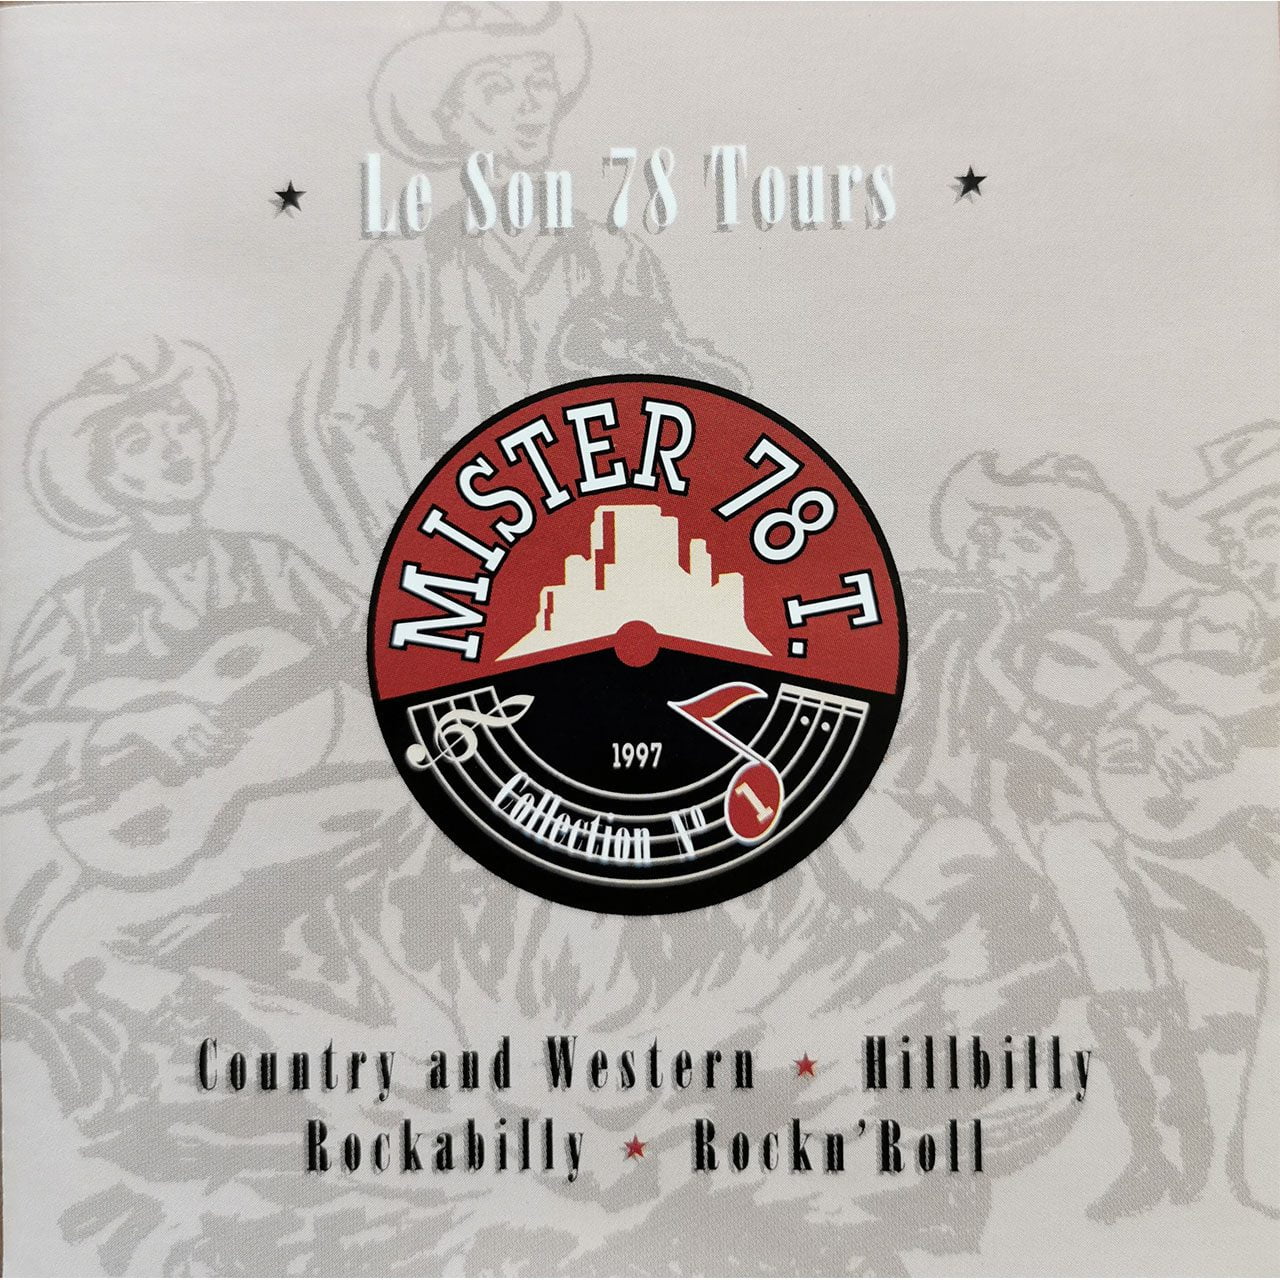 A.A.V.V. – “Mister 78 T. - Collection Nr. 1” cover album